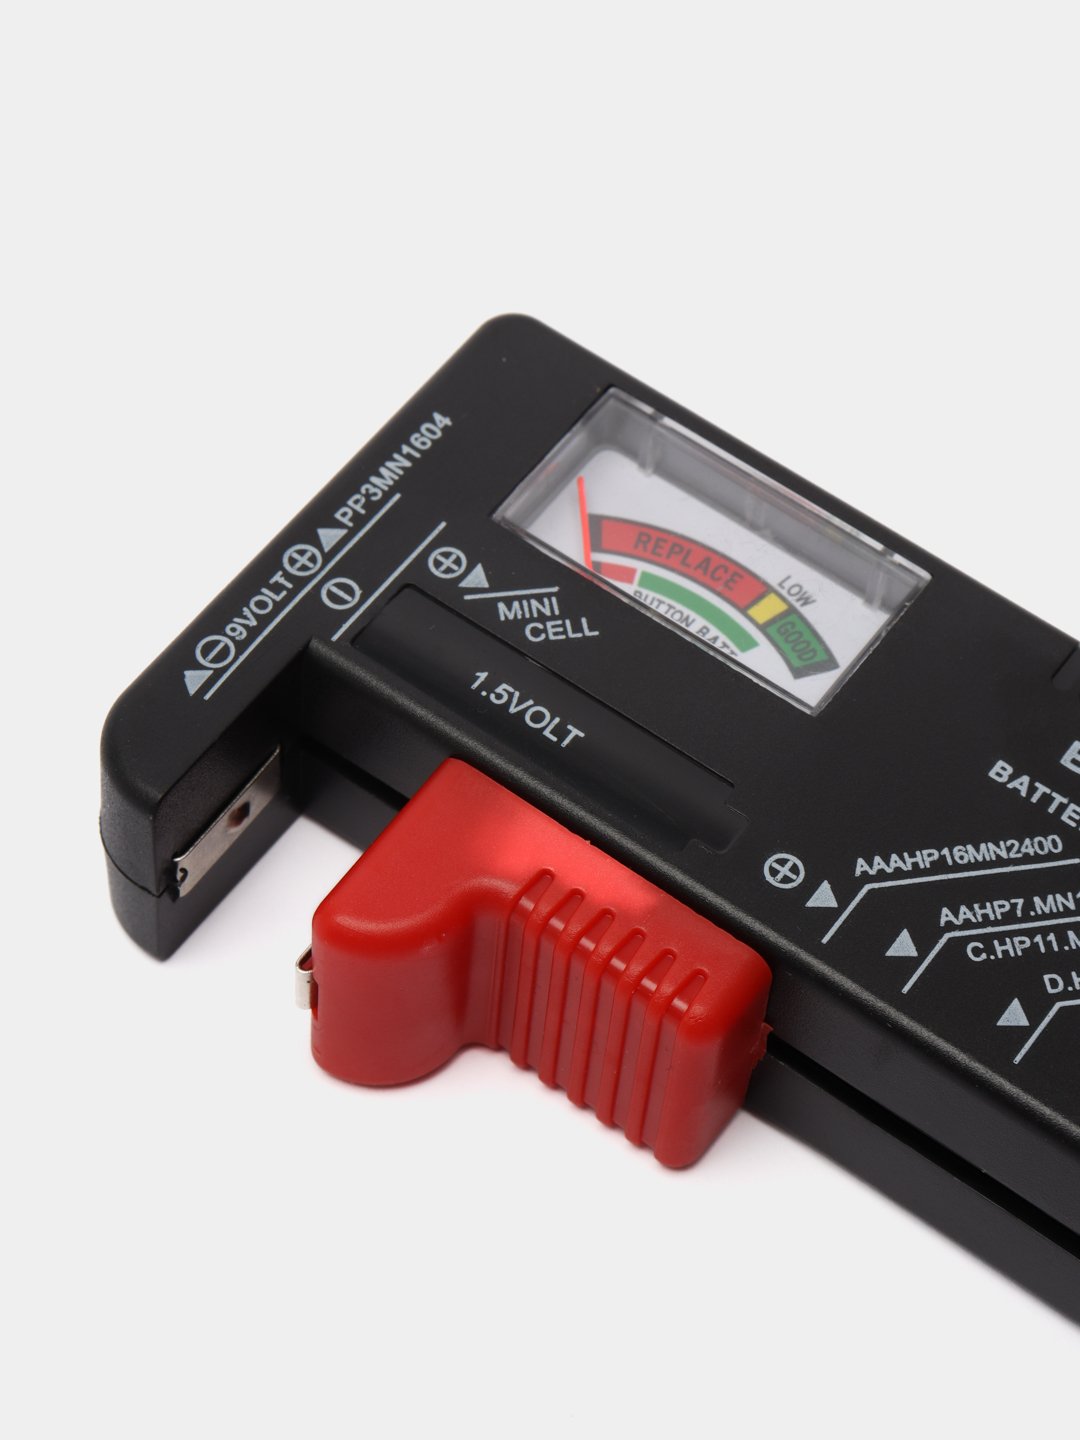 Тестер батареек и аккумуляторов - измеритель напряжения